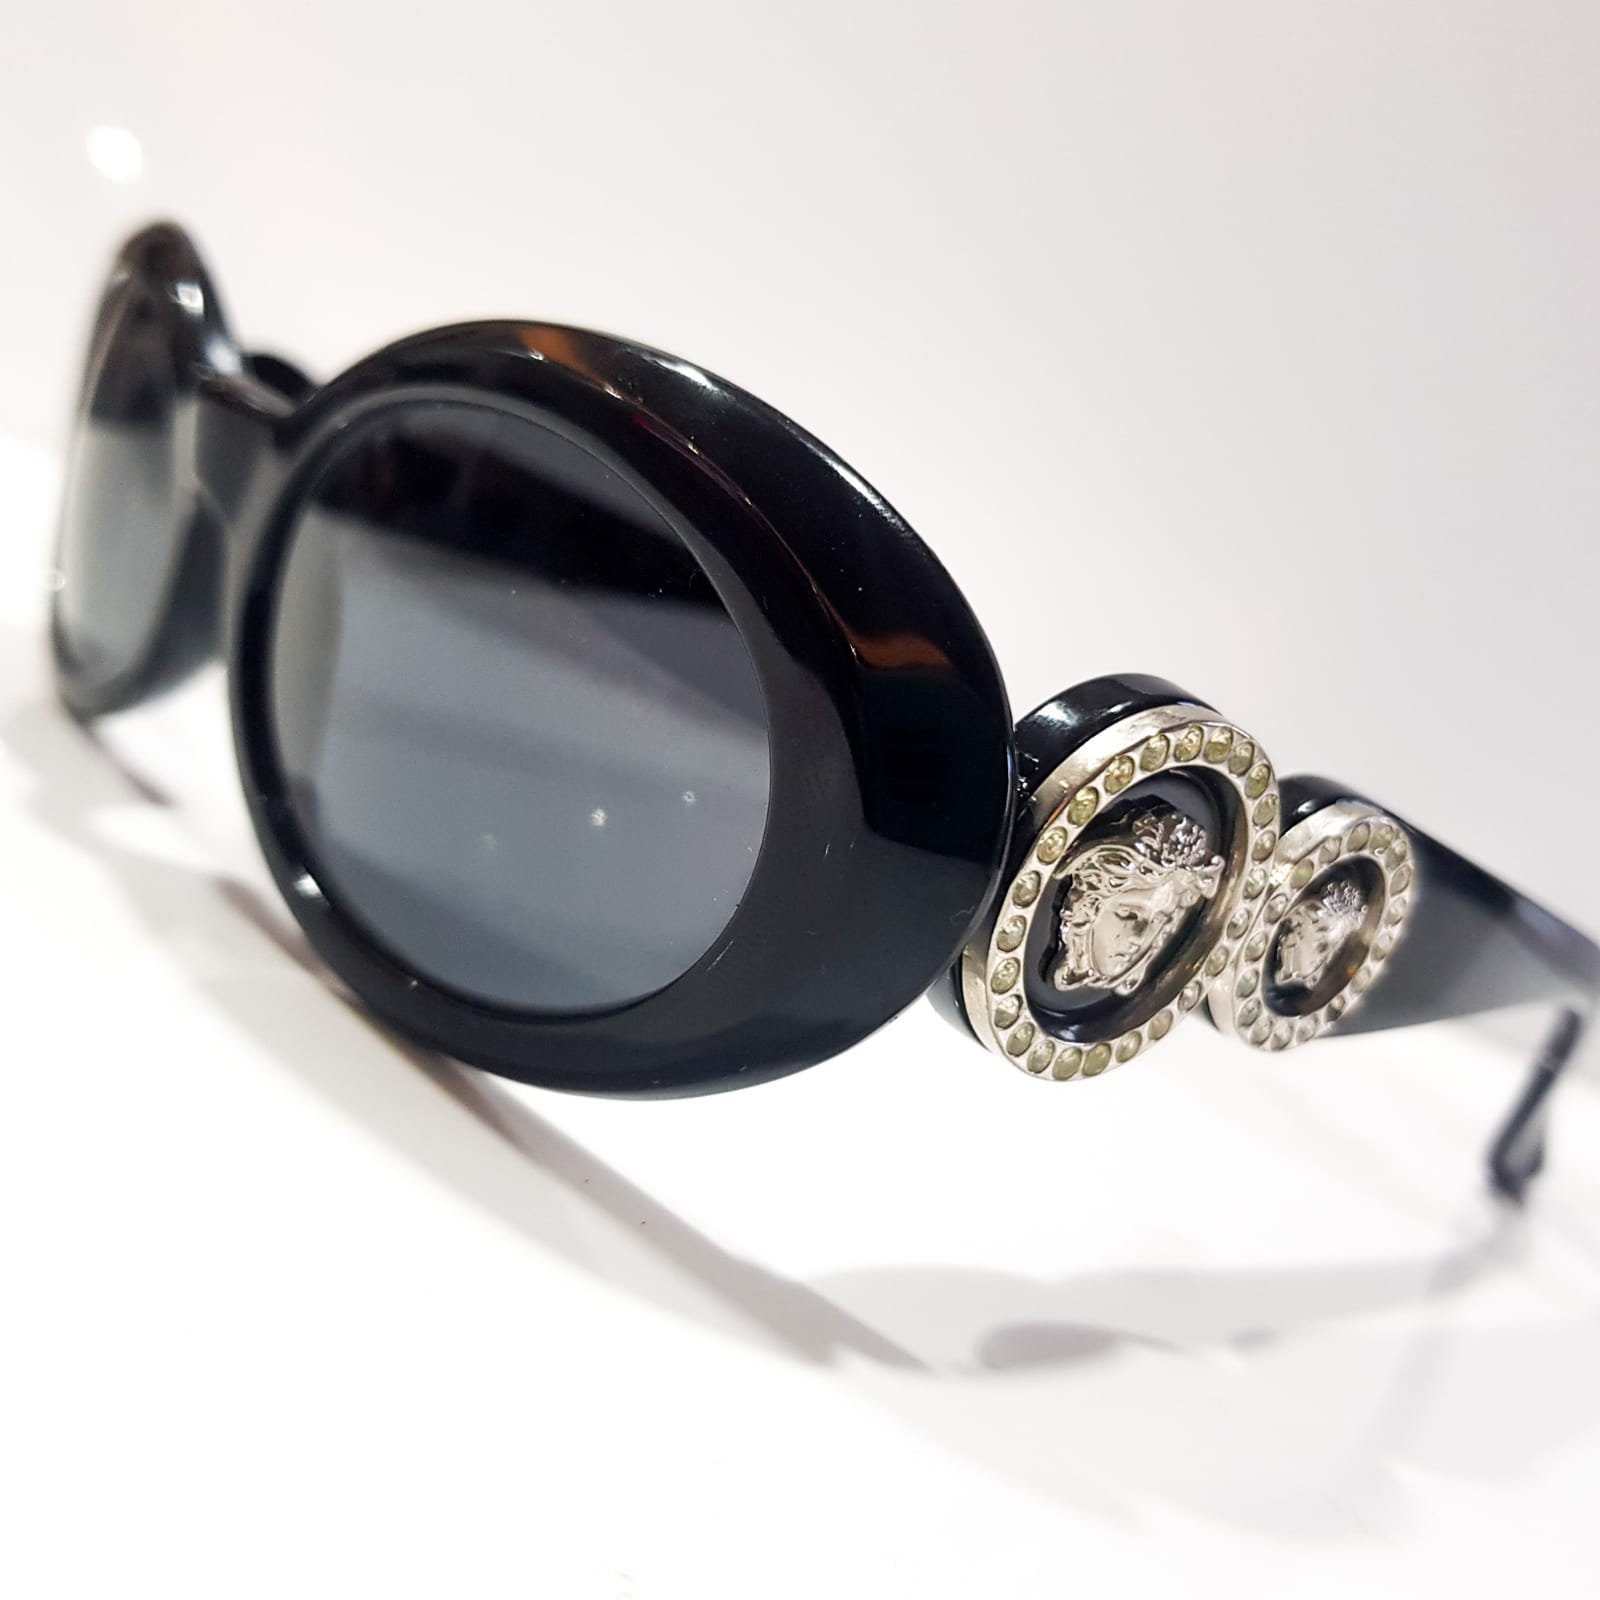 Gianni Versace Mod 527 Vintage Sunglasses NOS Frame 90s 80s 